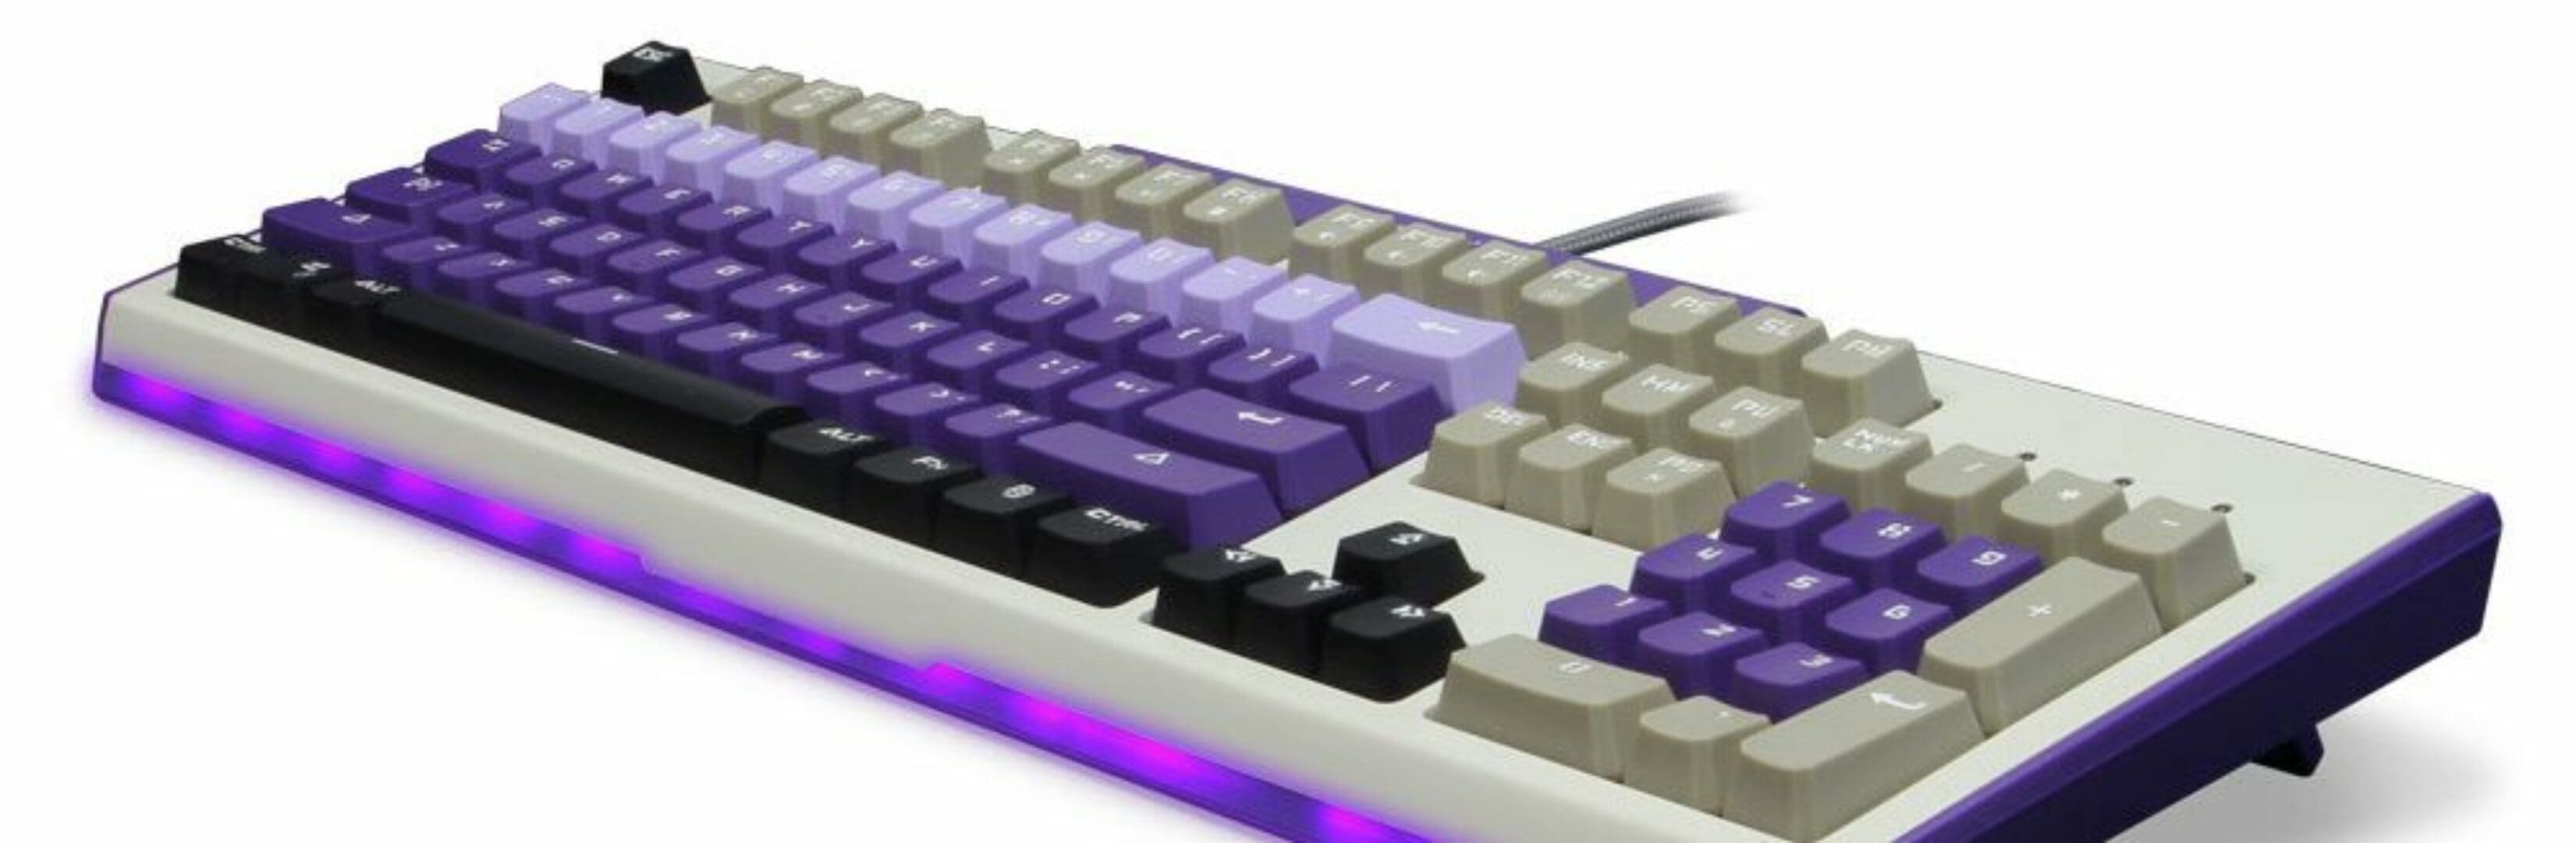 Retro-Inspired Keyboard